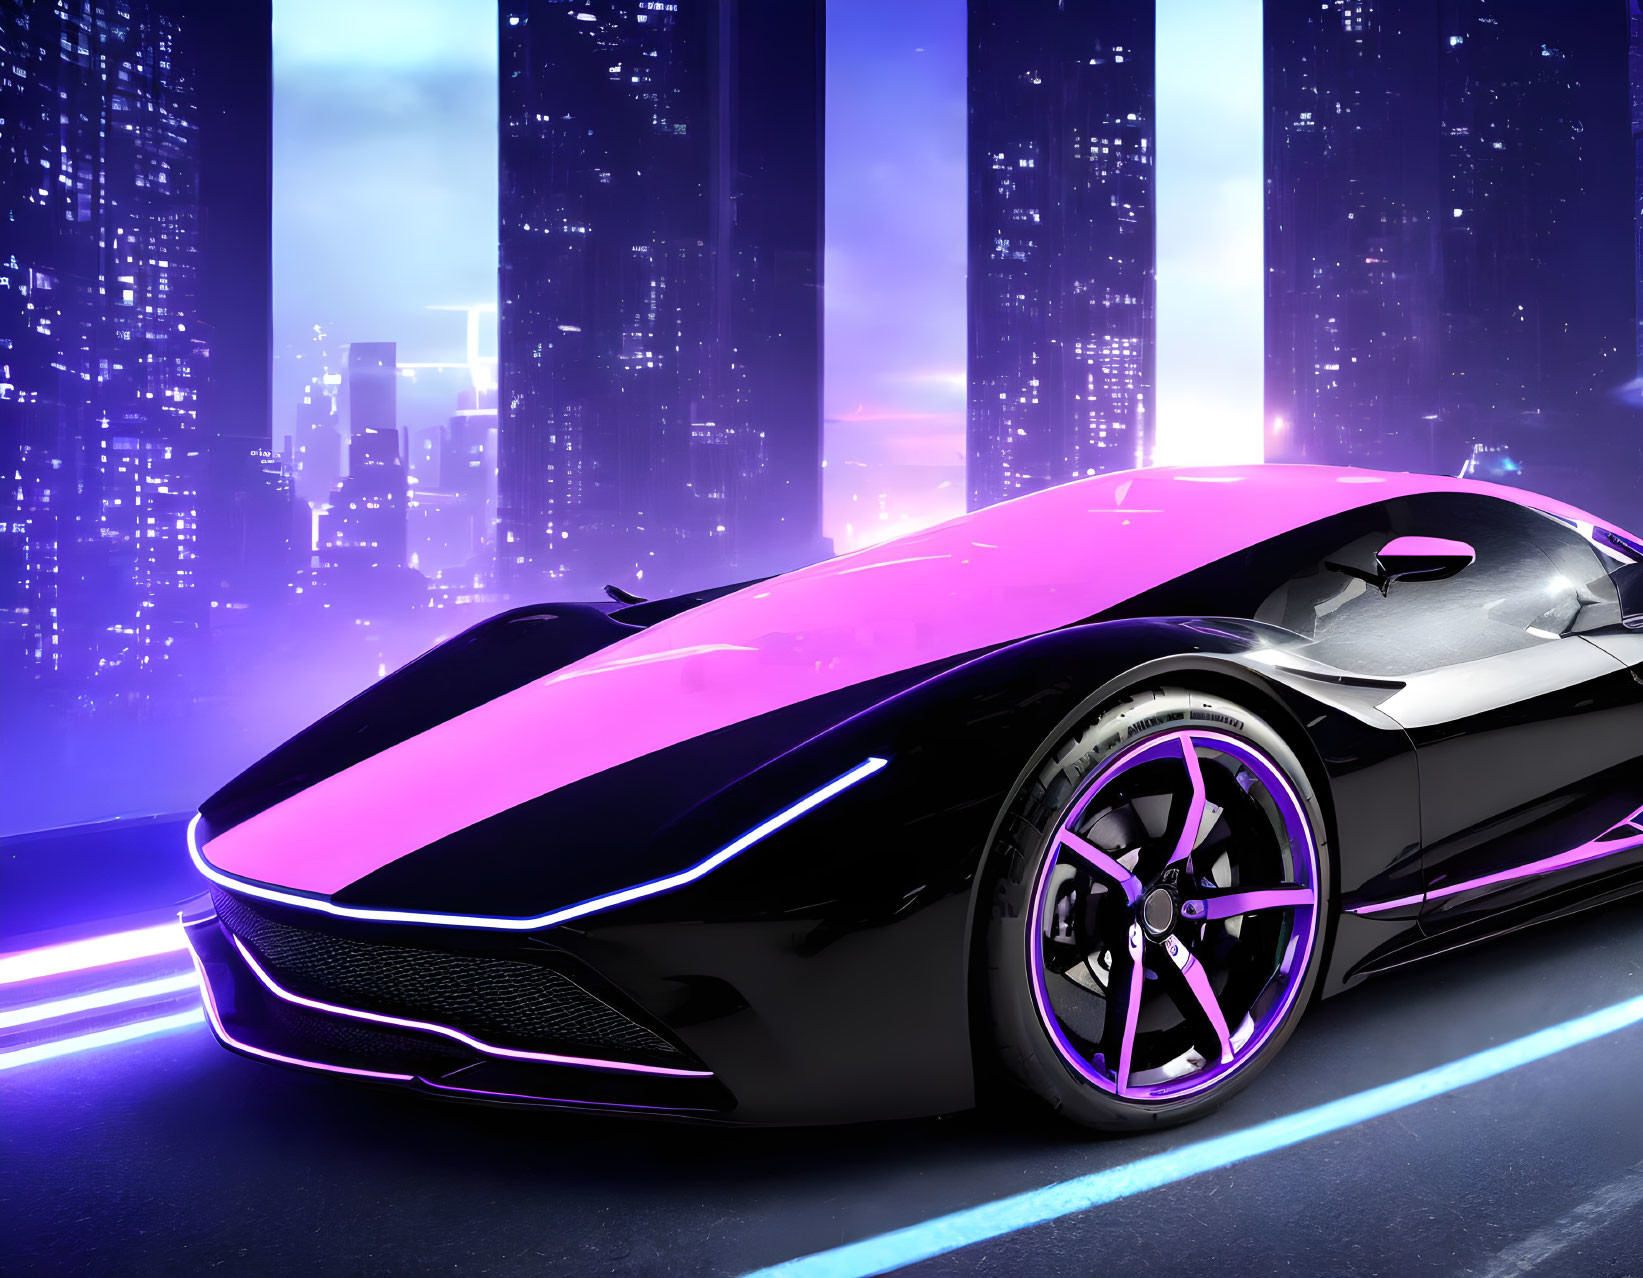 Black and Purple Sports Car with Neon Lights in Futuristic Night Cityscape